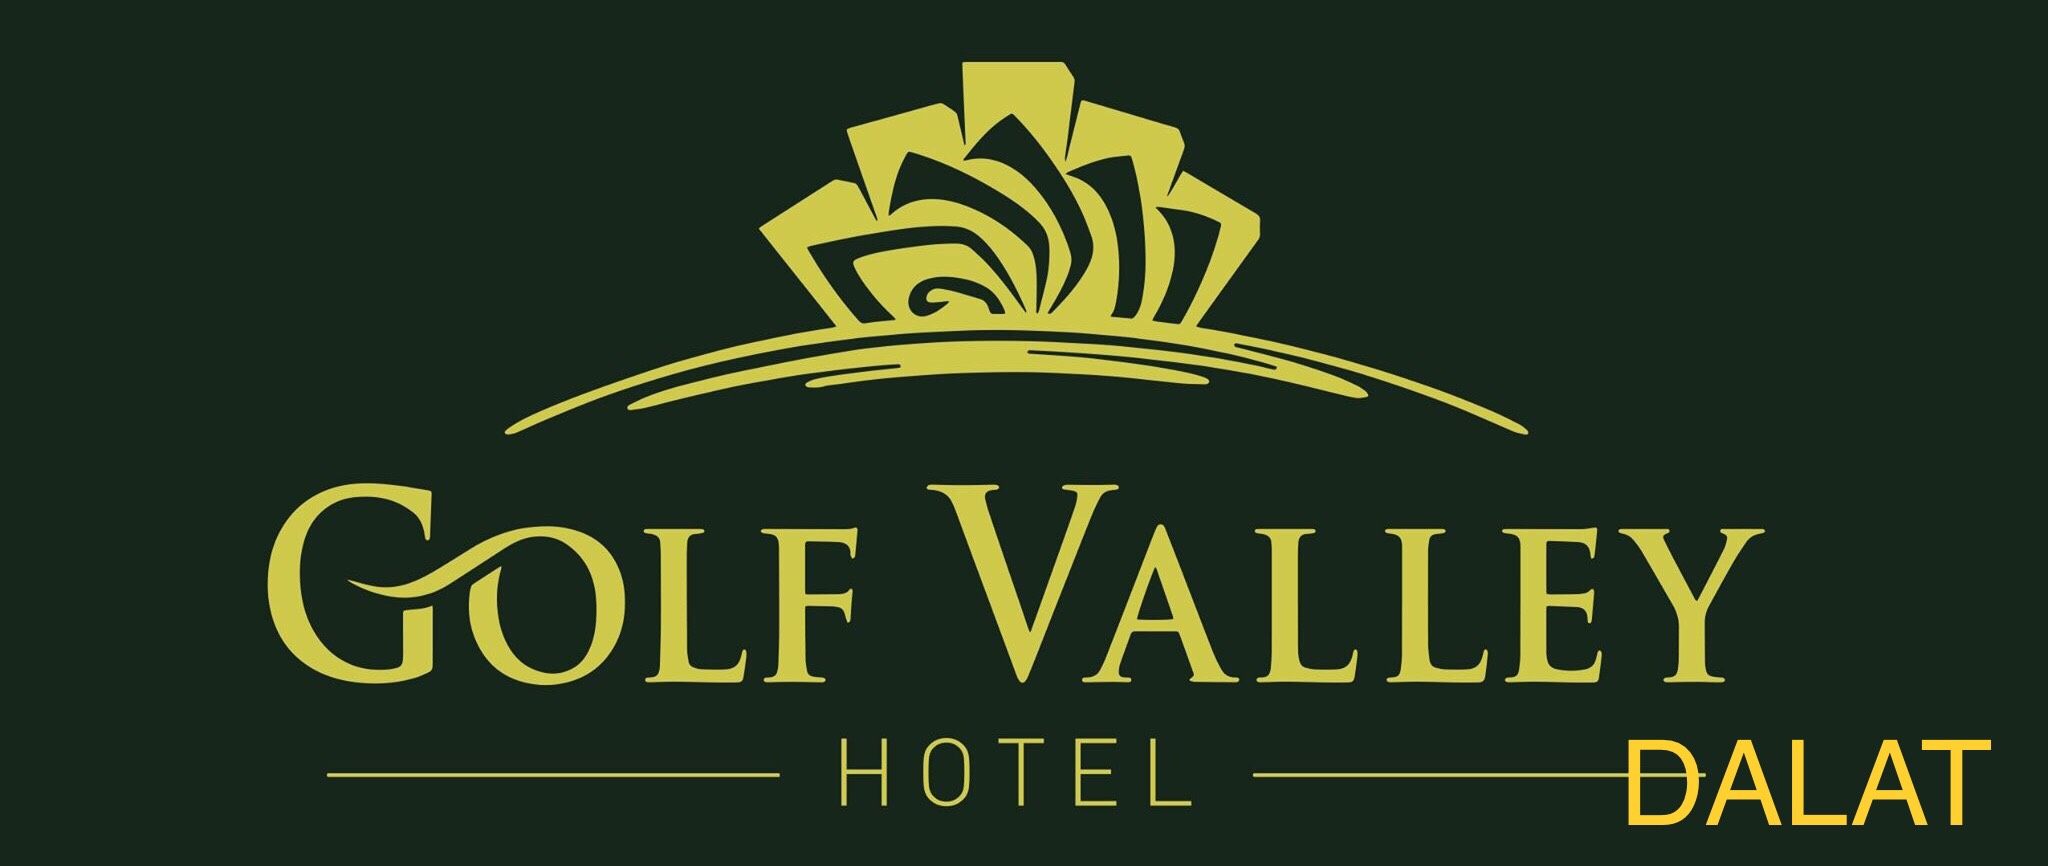 Golf Valley DaLat